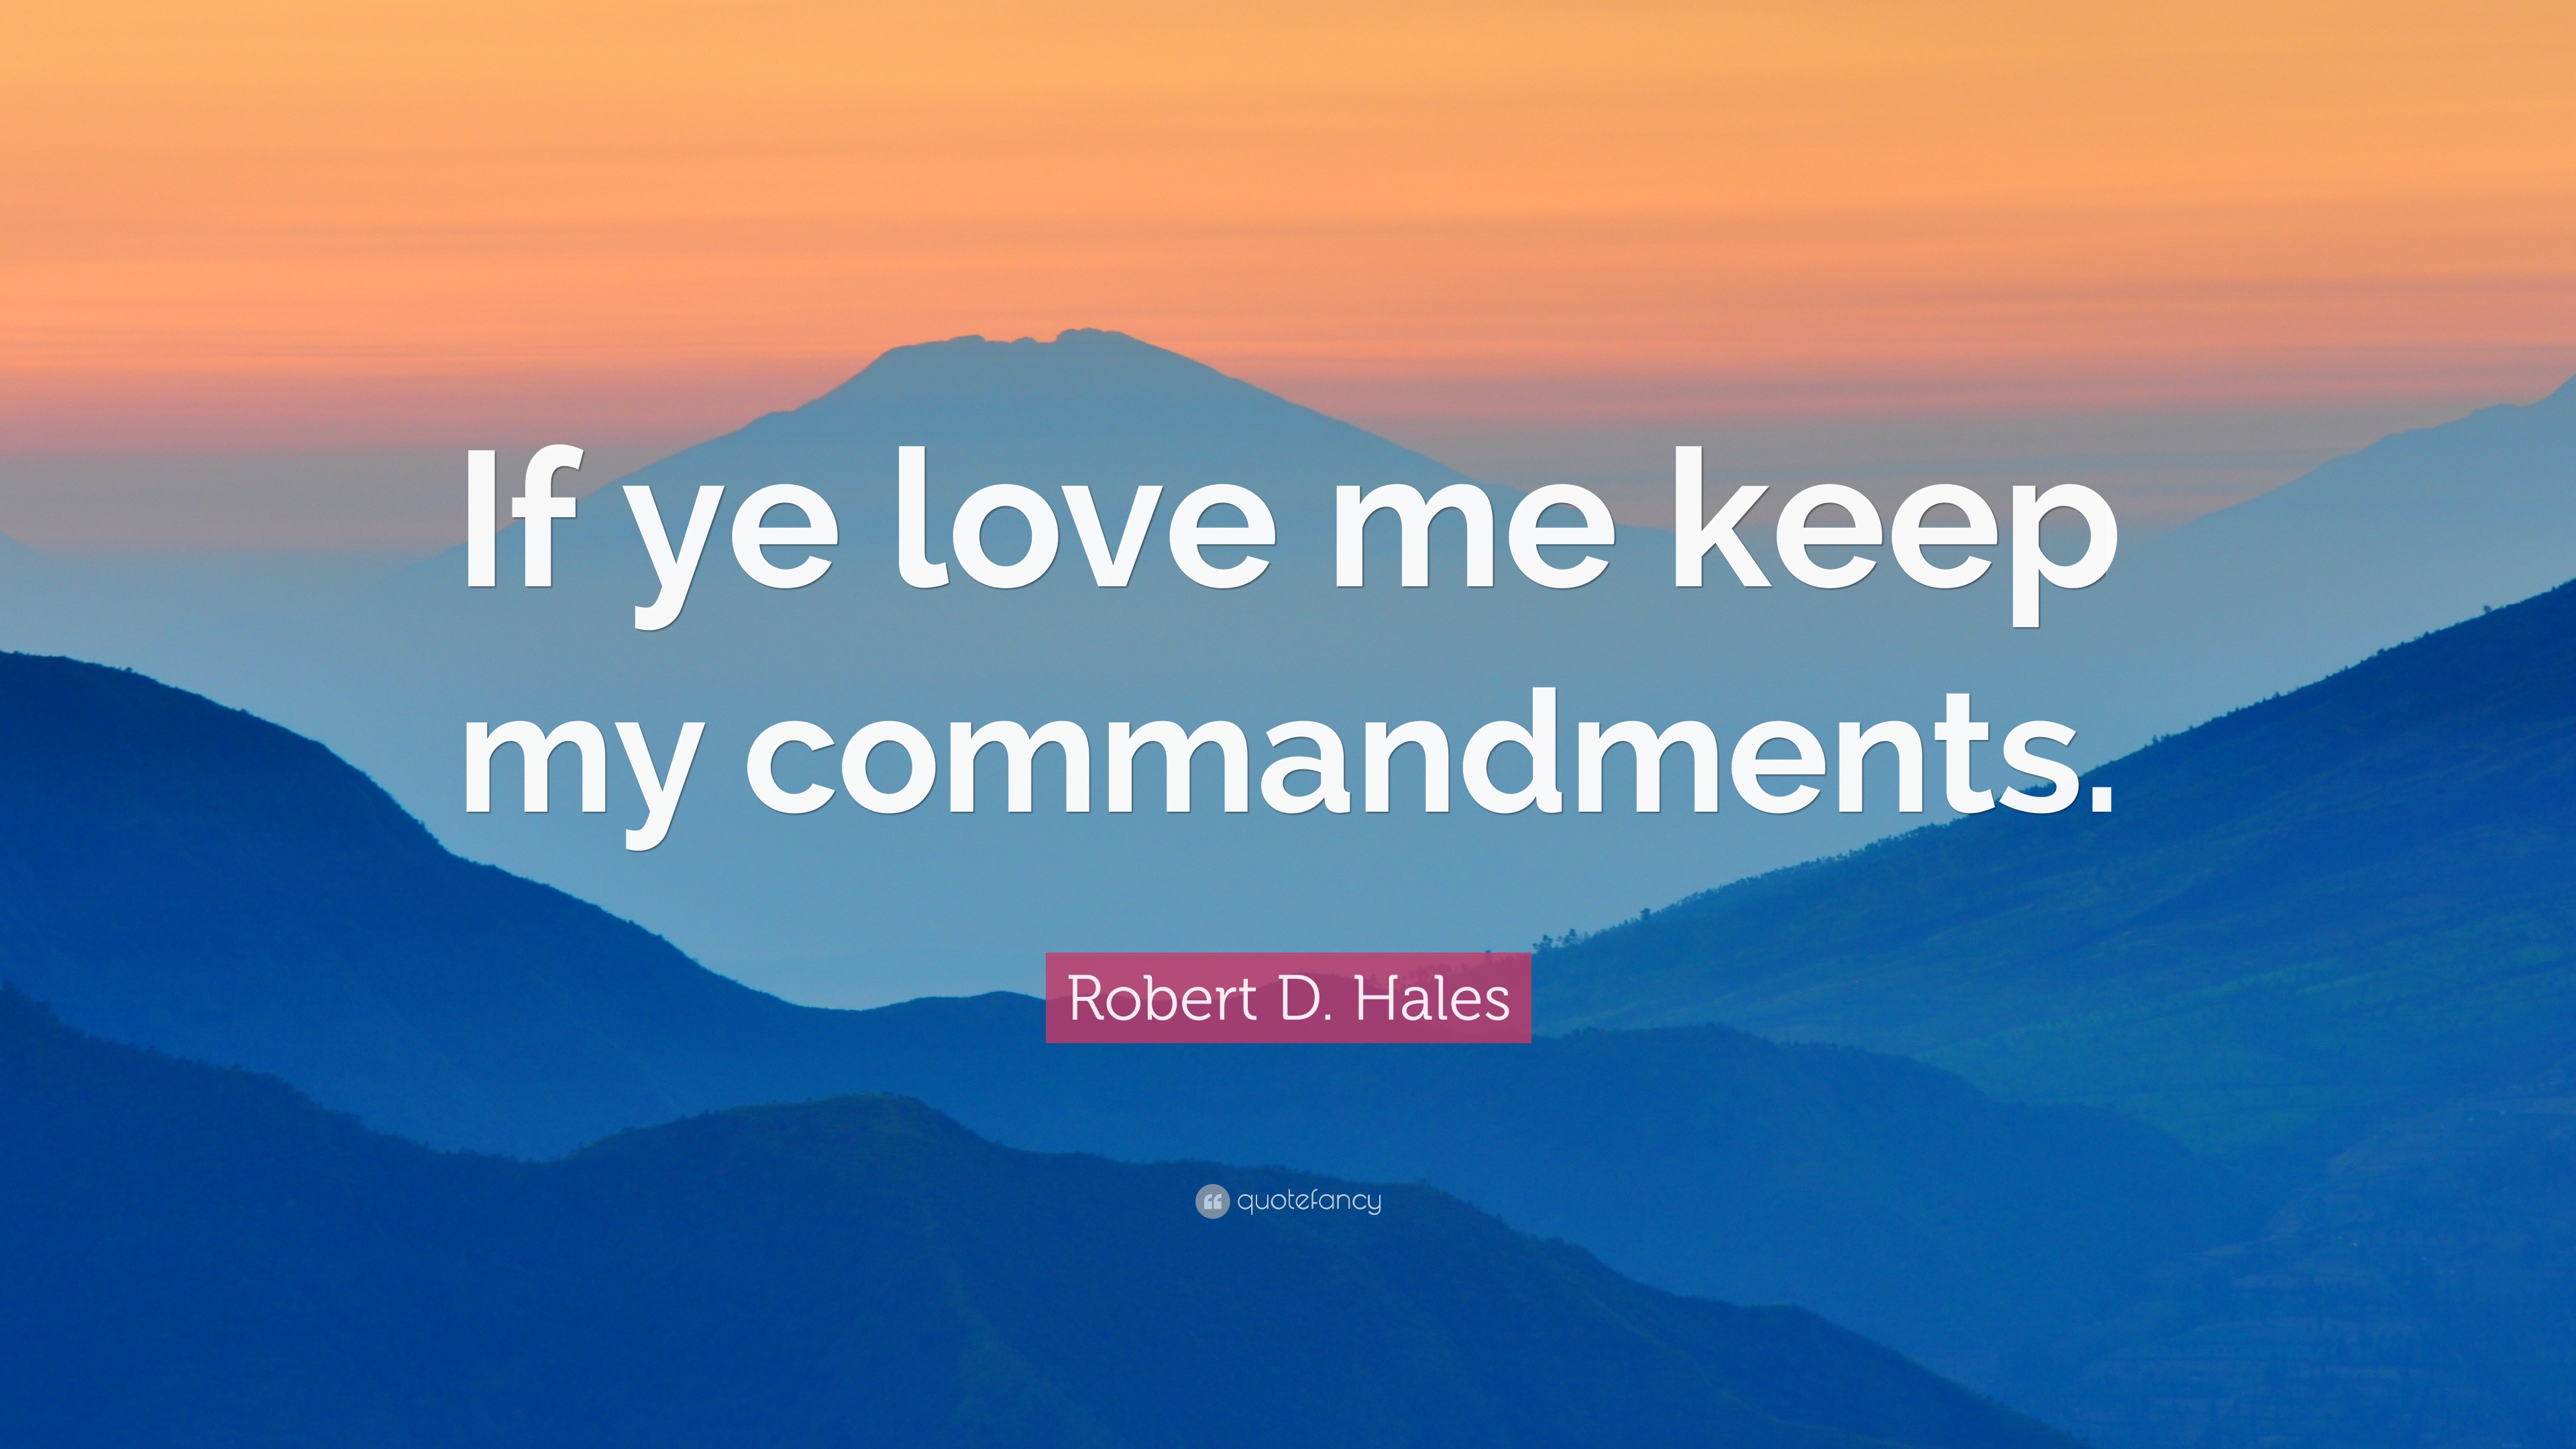 if you love me keep my commandments